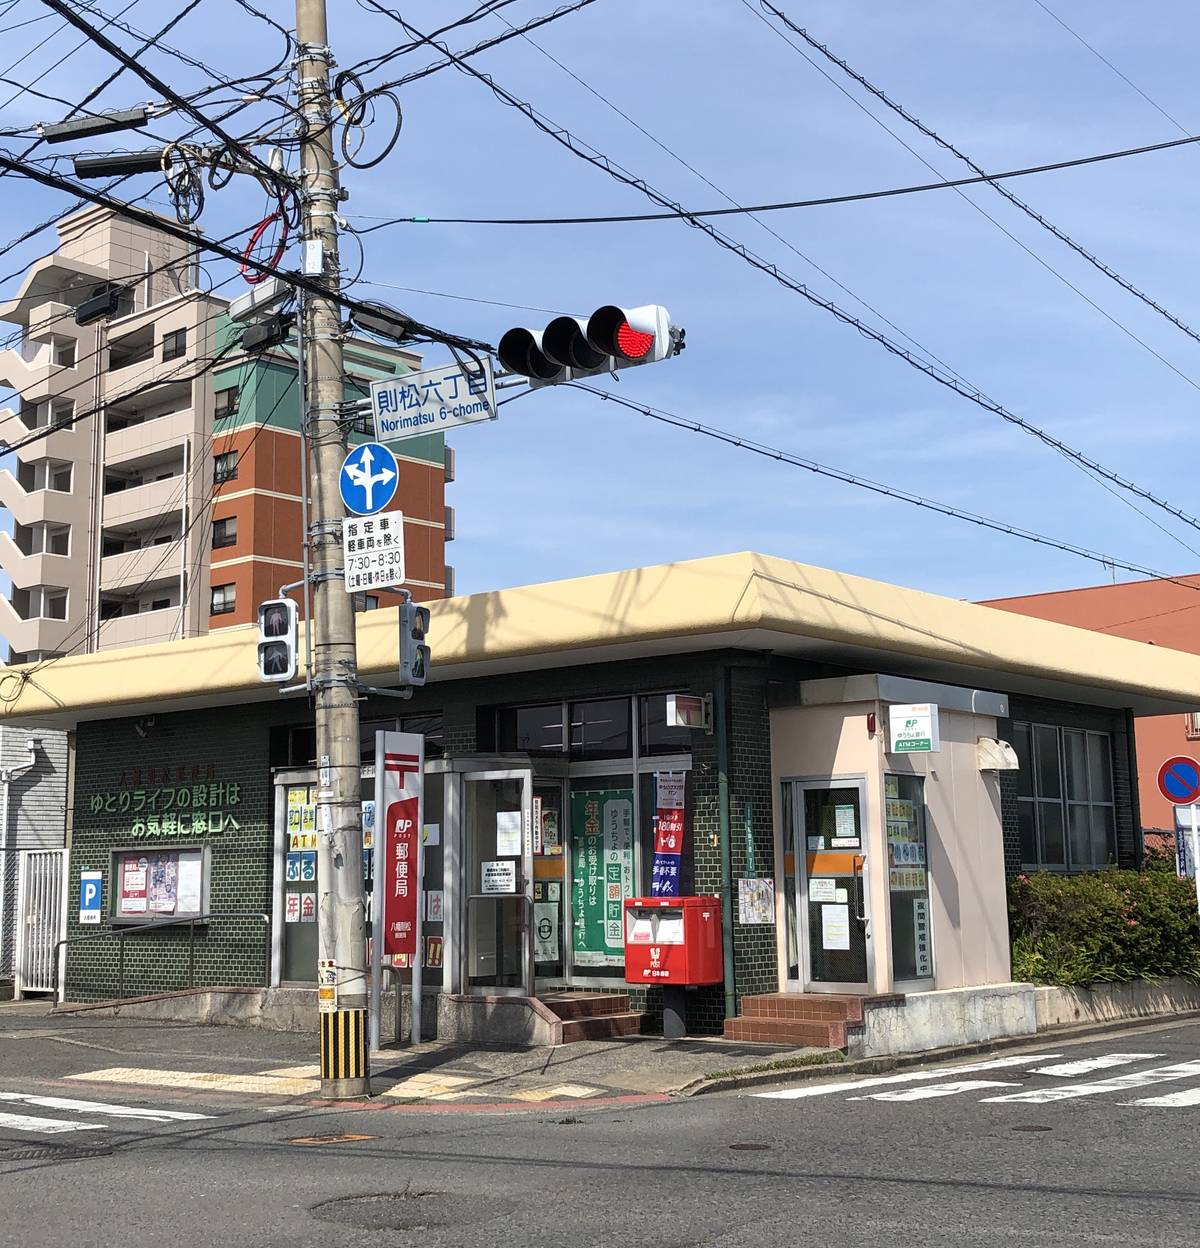 Post Office near Village House Norimatsu in Yahatanishi-ku